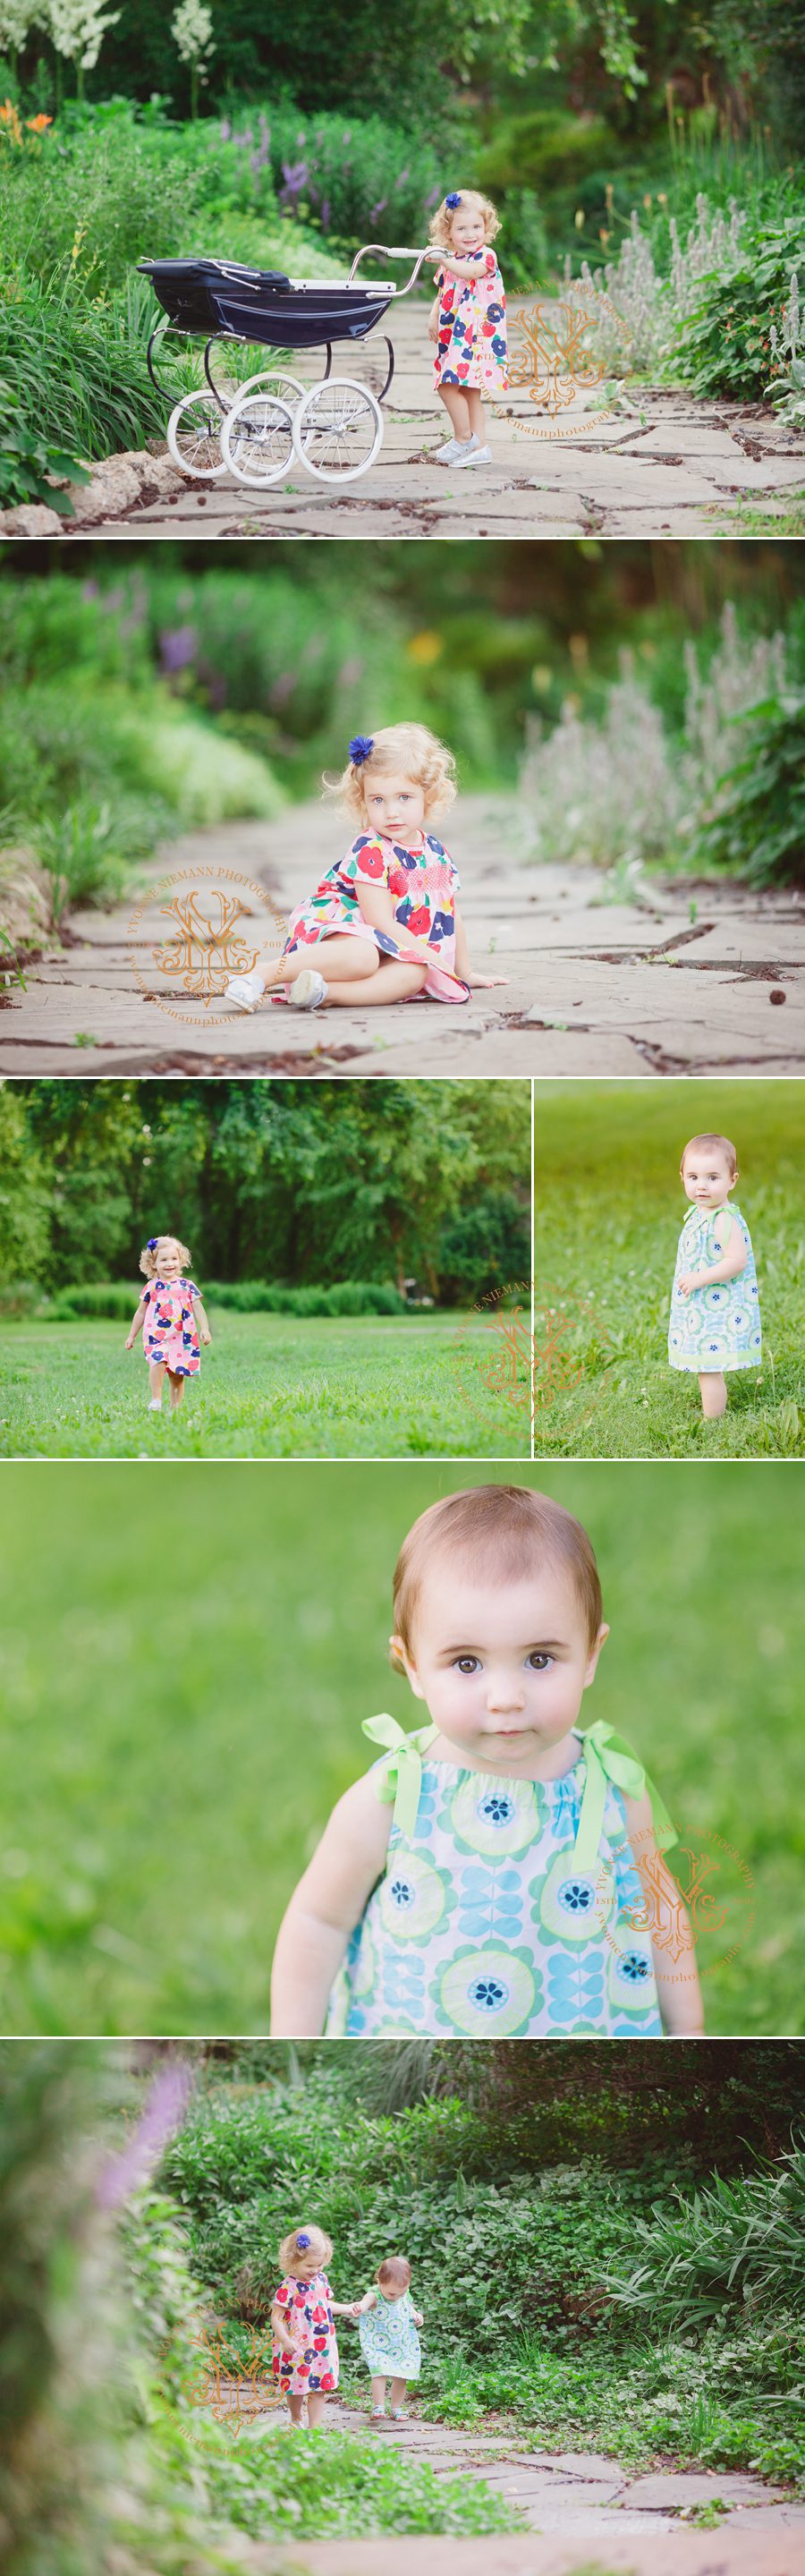 St Louis children's portraits of two little girls taken by Yvonne Niemann Photography